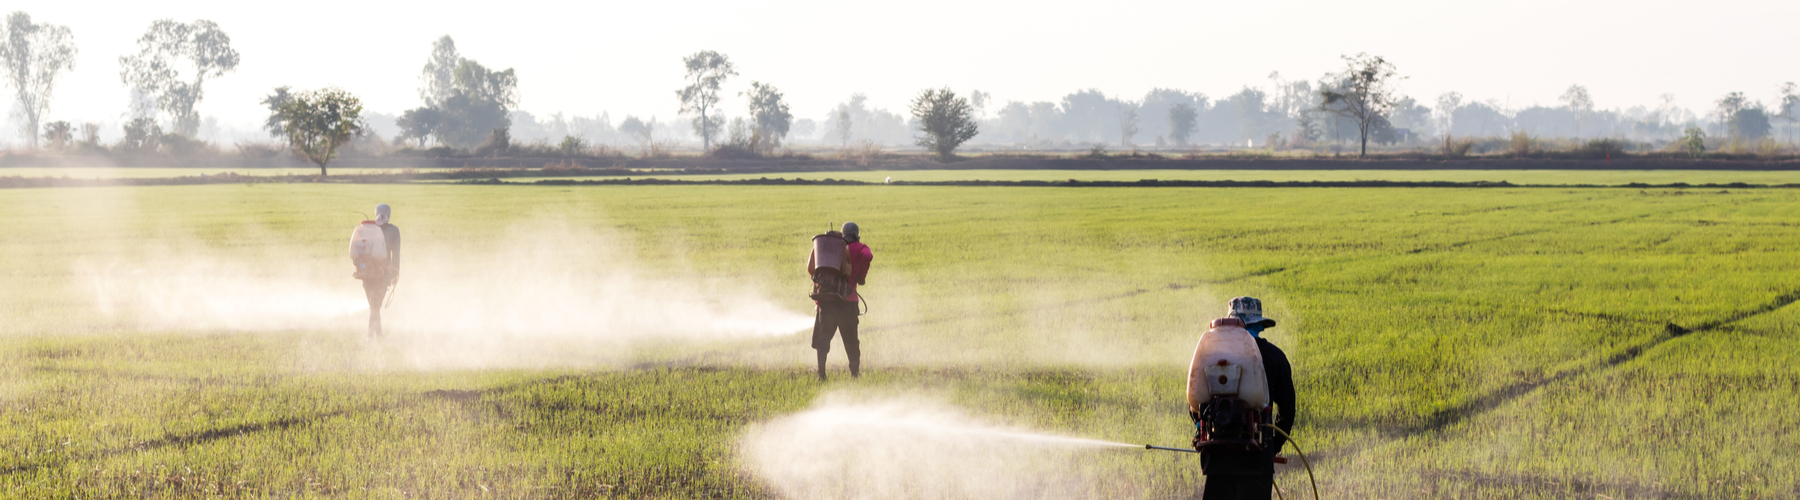 men spraying chemicals on field